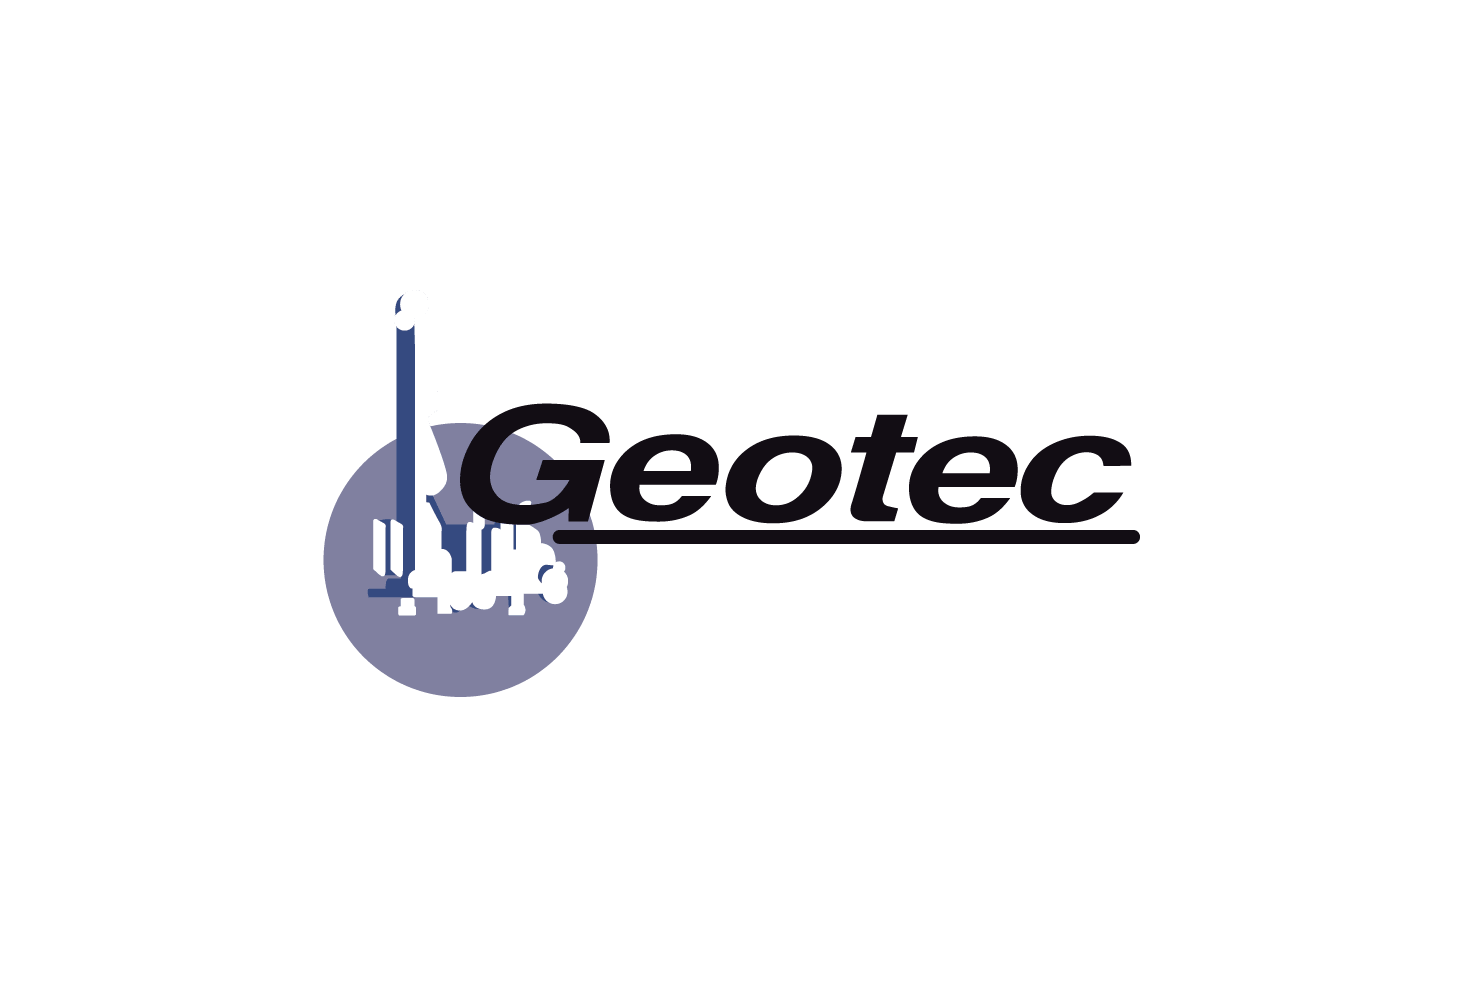 Logo Geotec